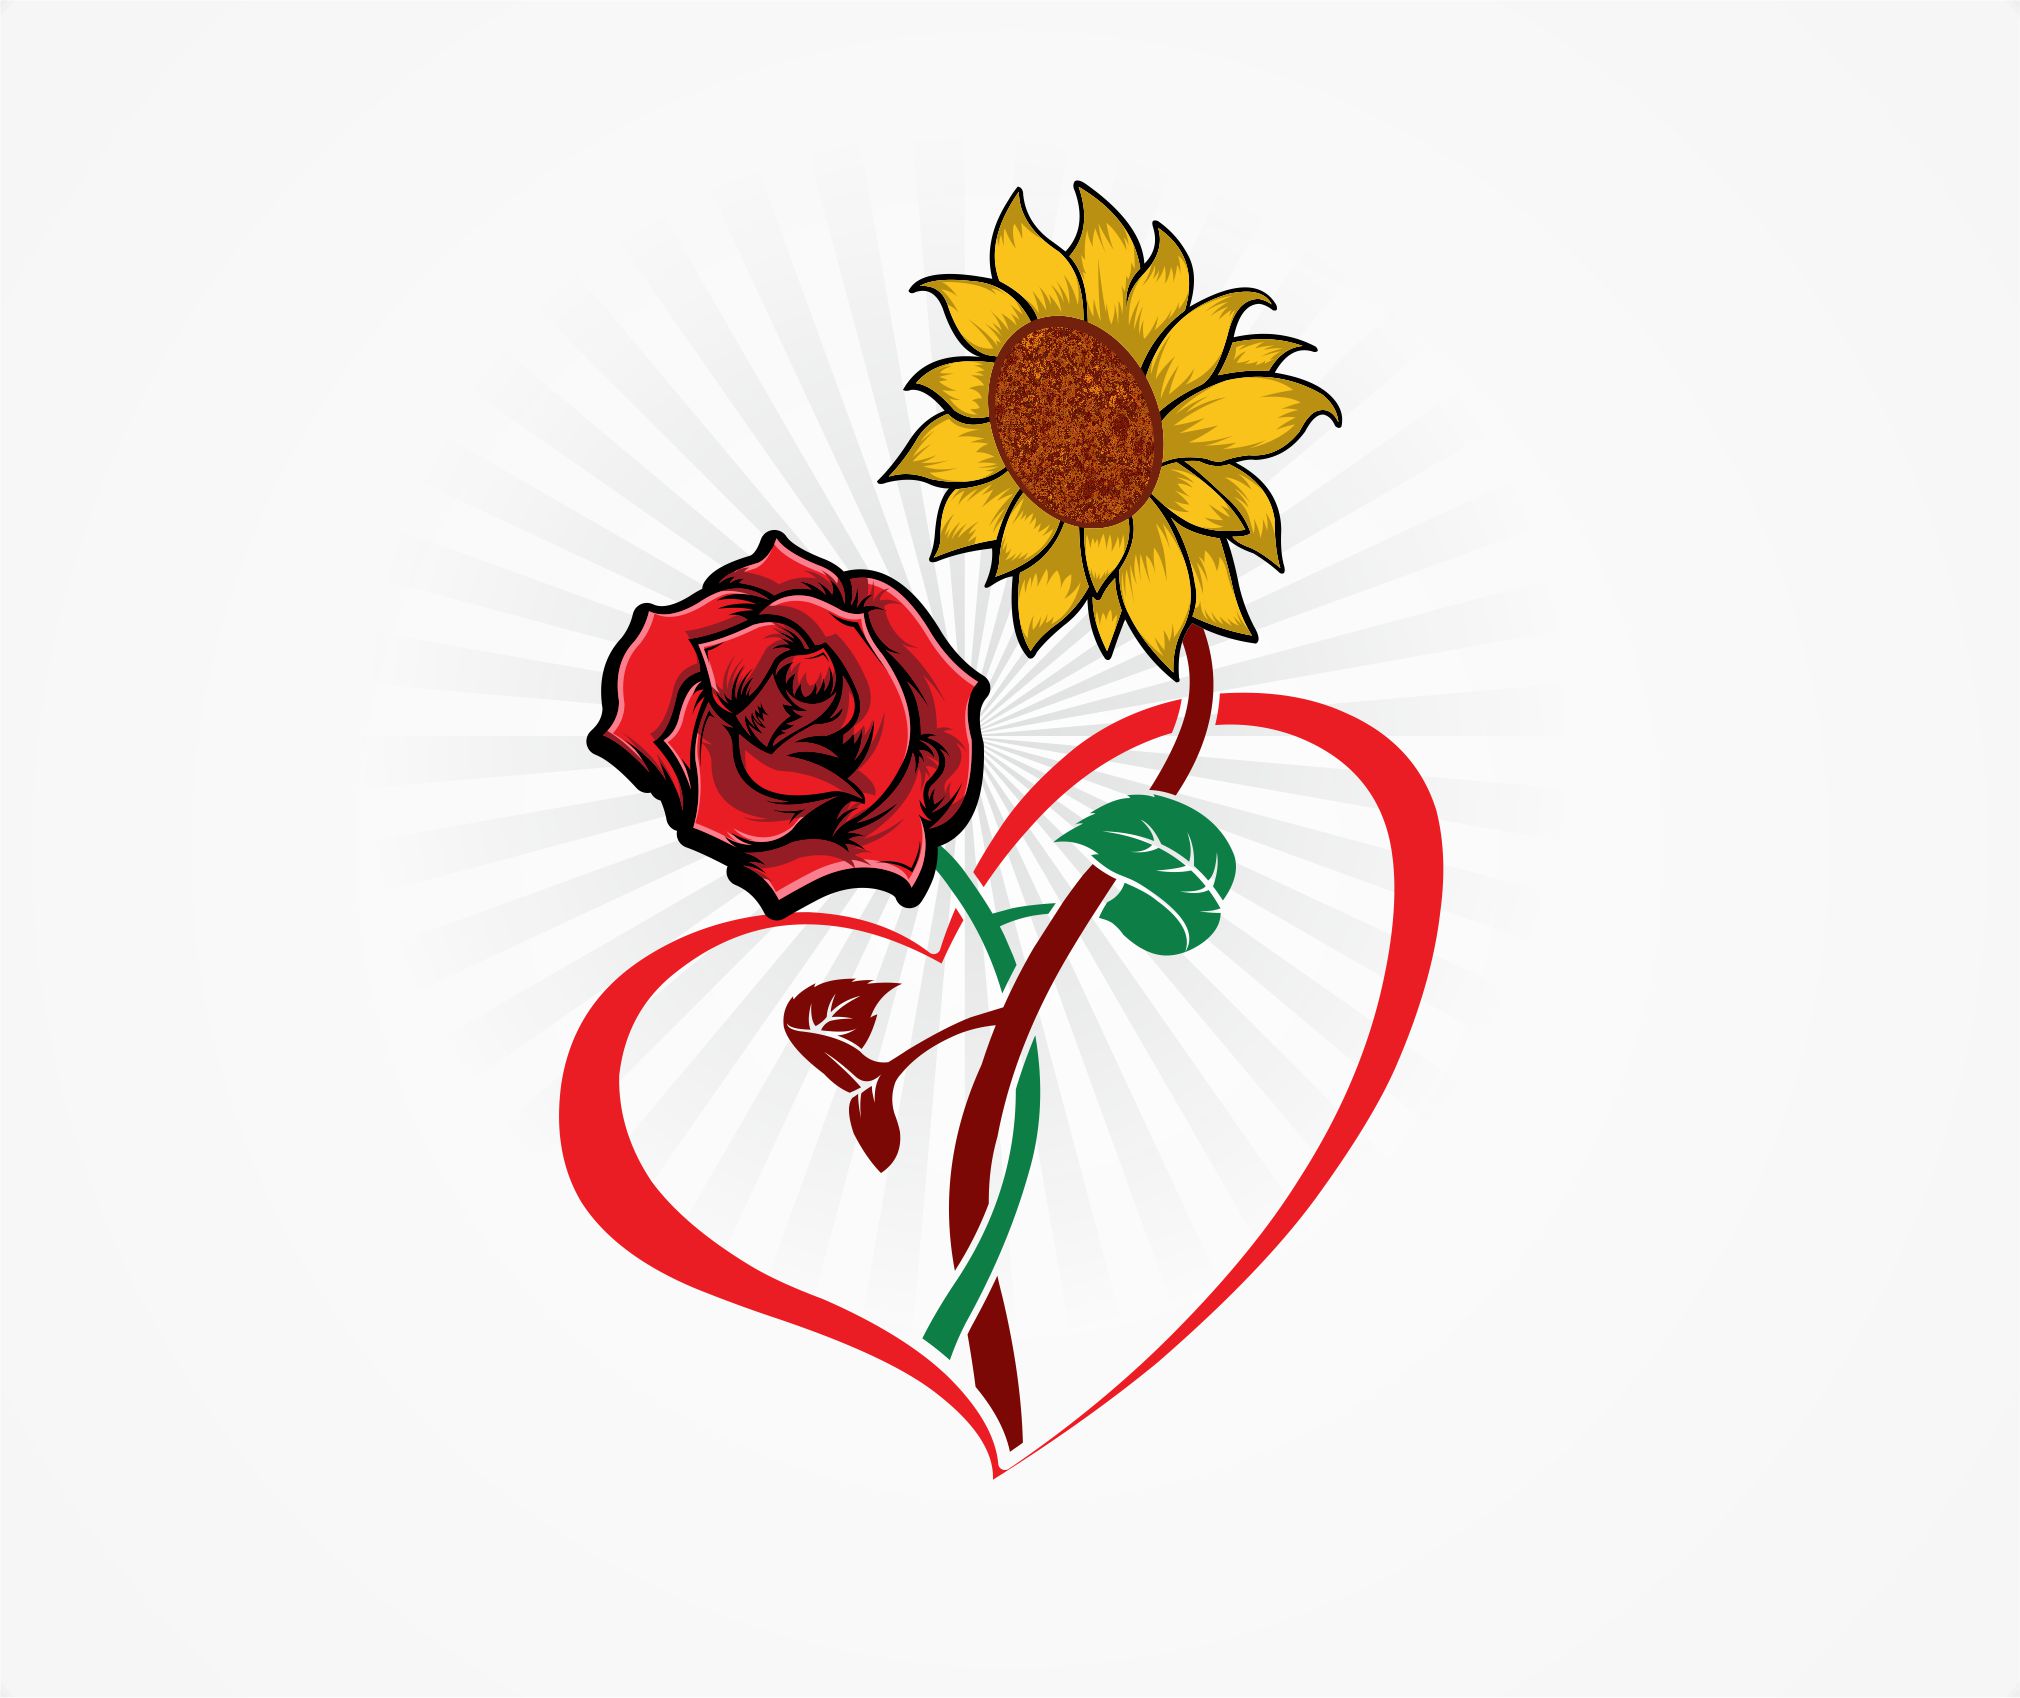 Logo Design entry 2239614 submitted by wongsanus to the Logo Design for Rose/sunflower run by jackm@jakks.net